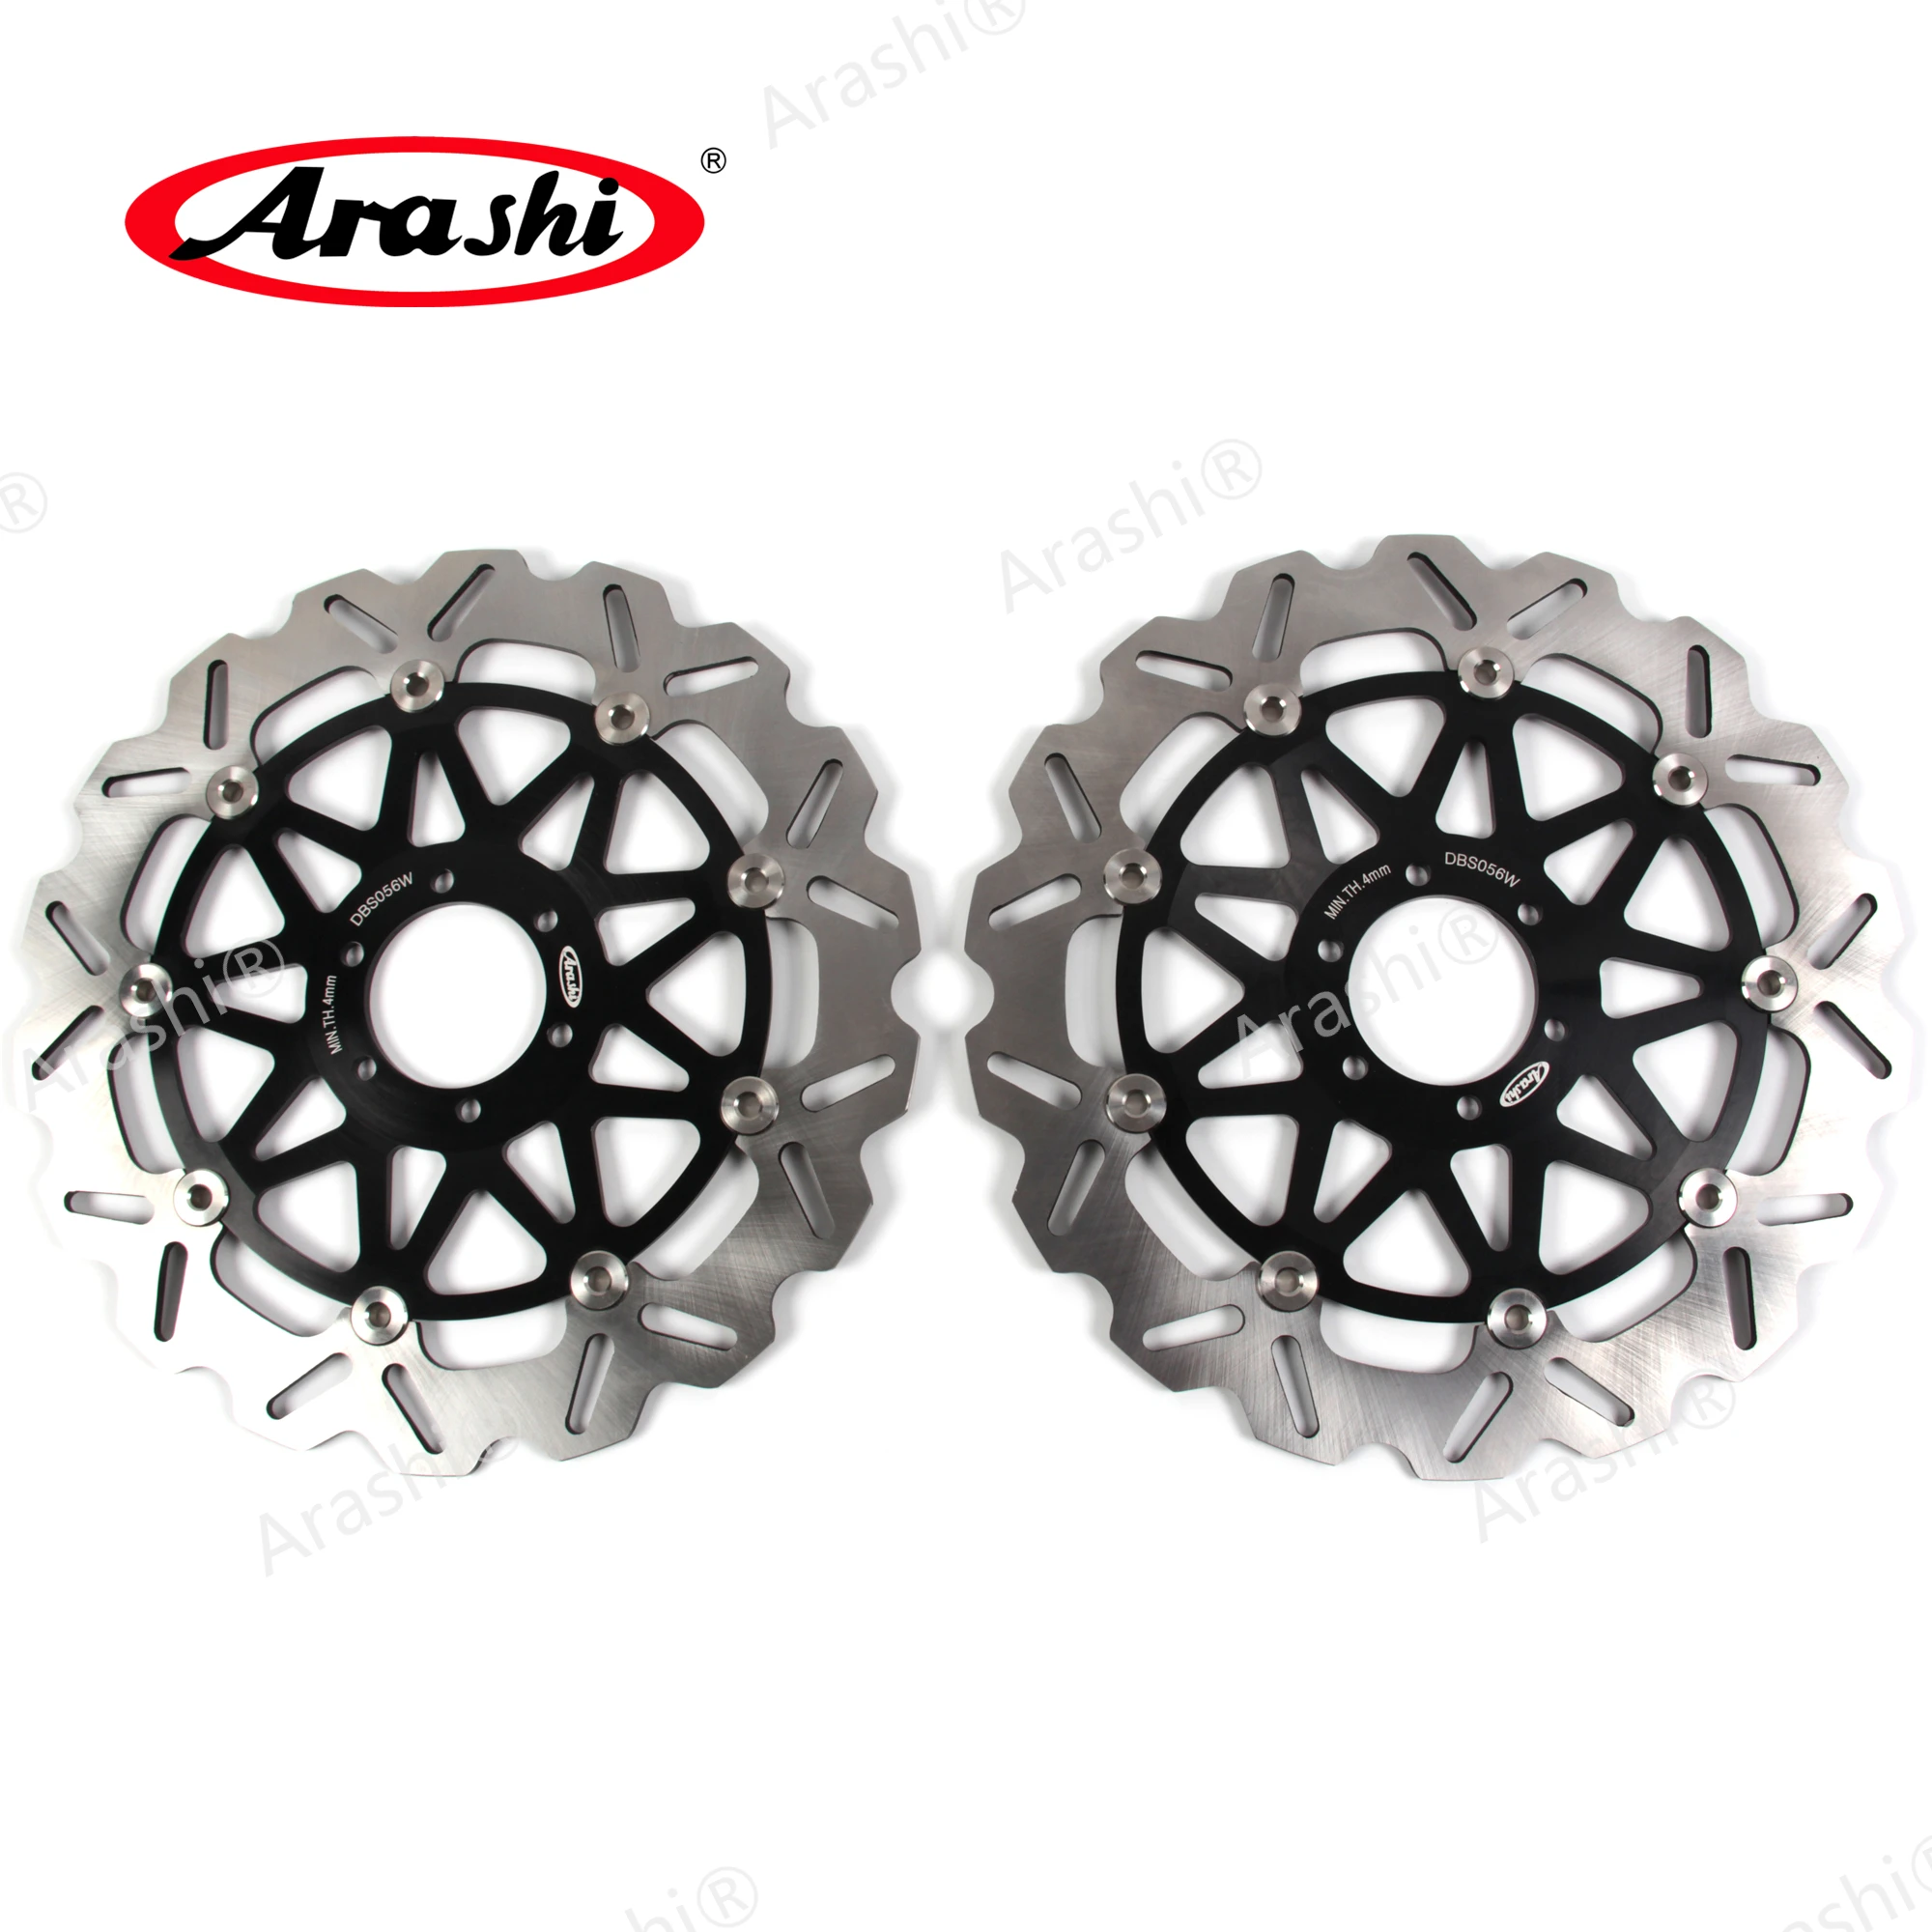 

ARASHI CNC Front Brake Rotors Floating Discs For DUCATI 748 SP 1995 1996 1997 / 748 SPS 1998 1999 Motorcycle Aluminium Disk